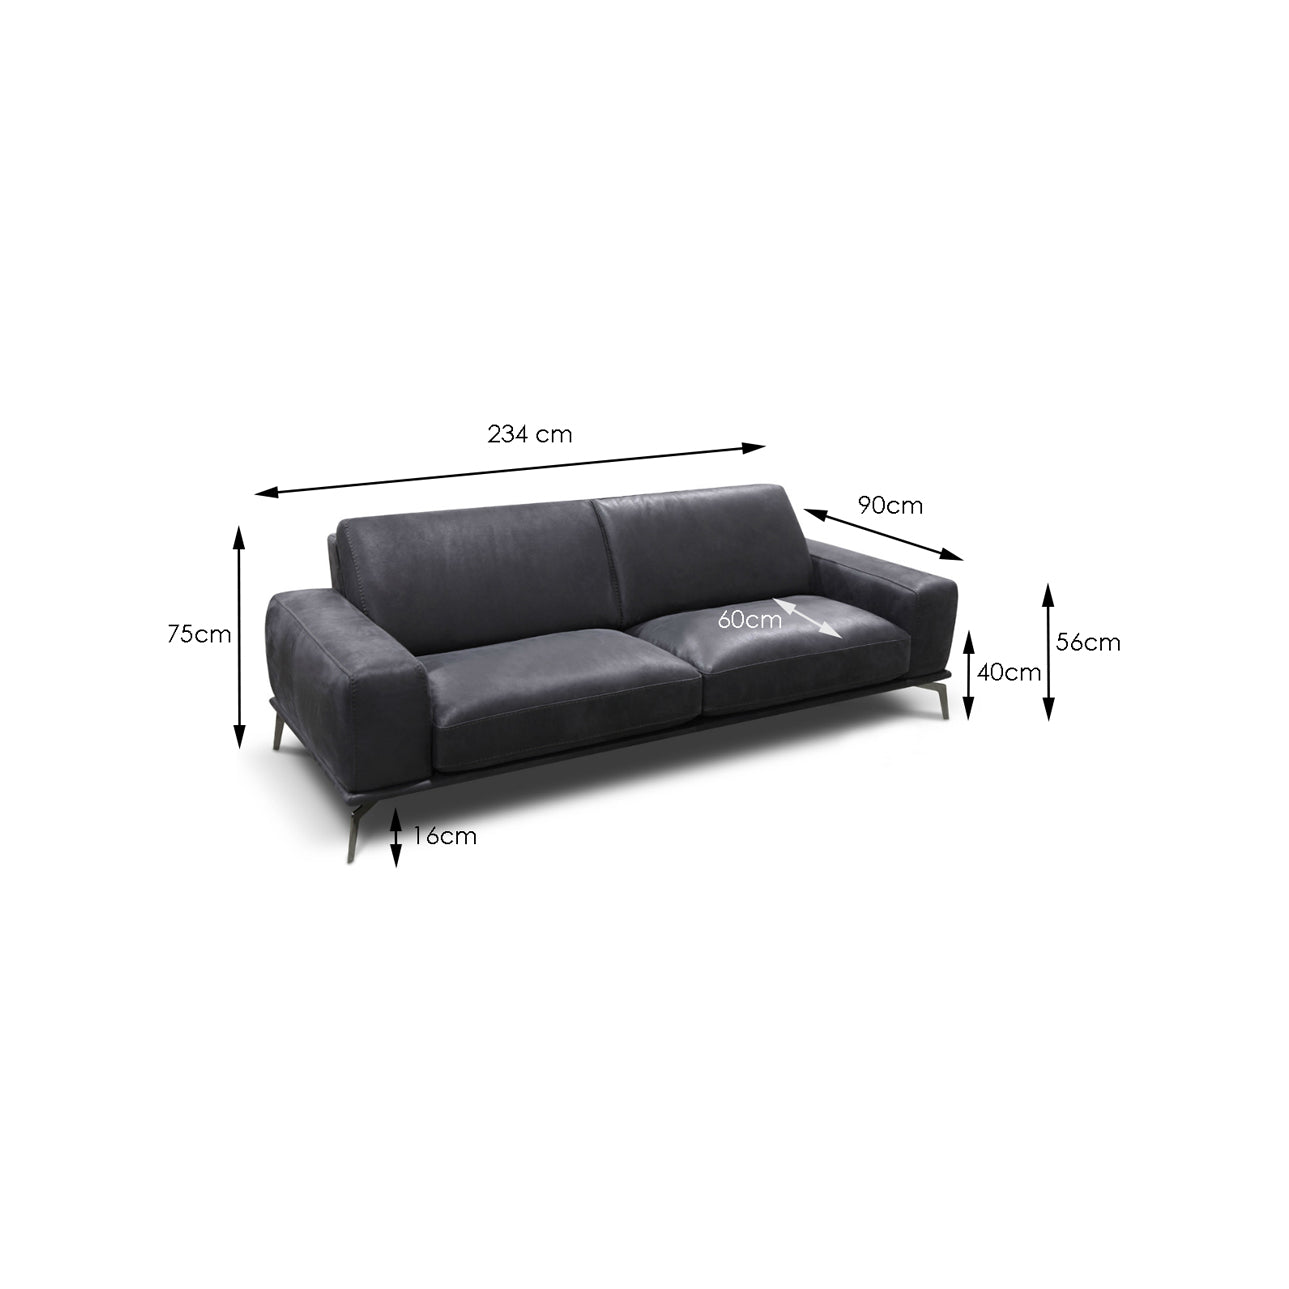 Tivoli sofa